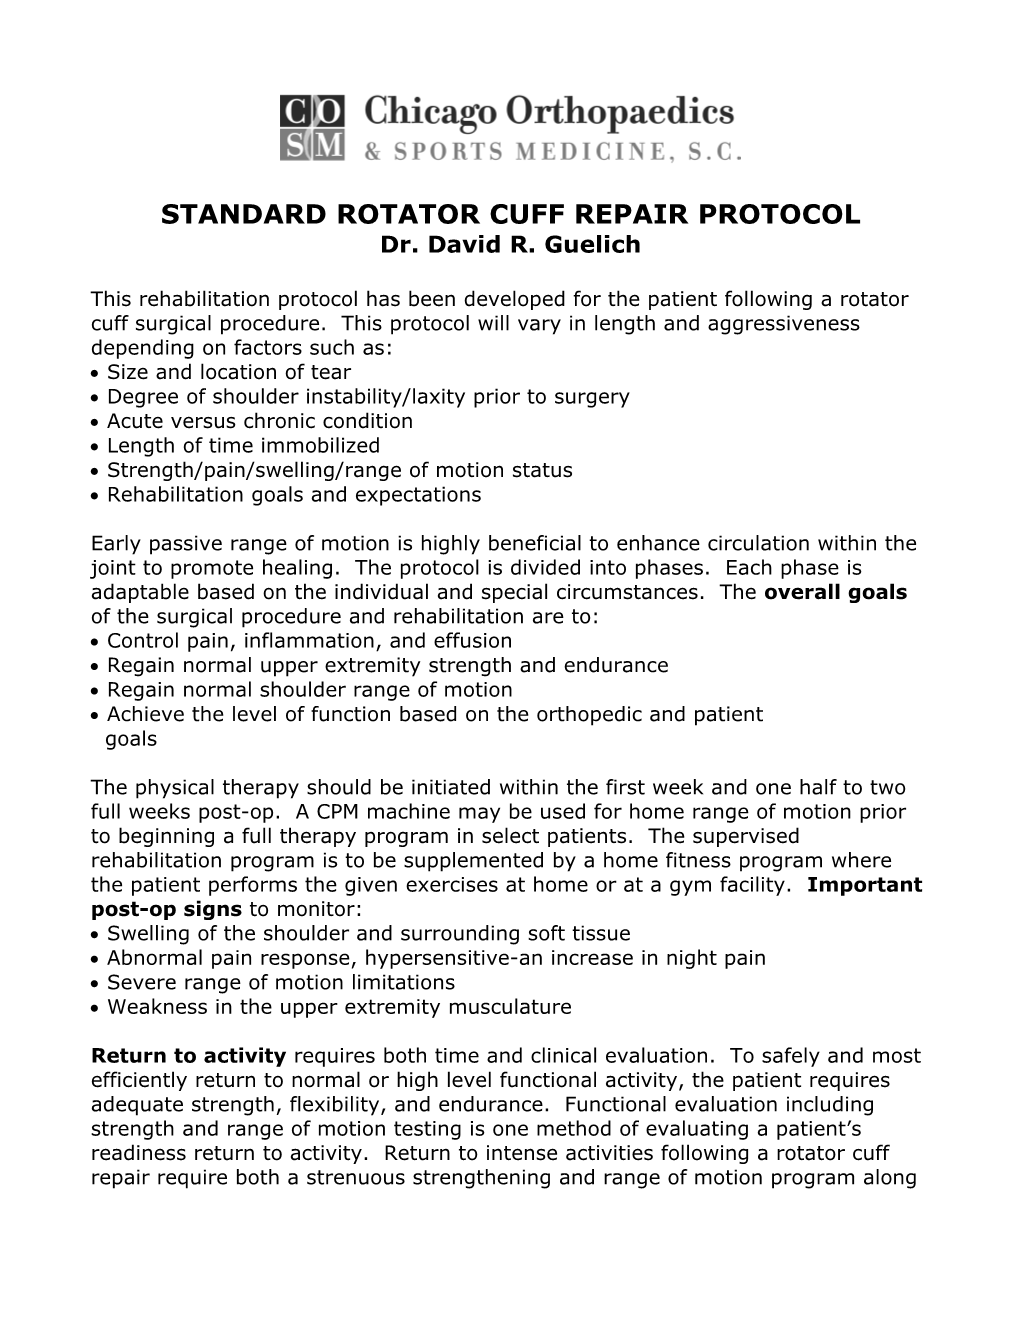 Rotator Cuff Repair Protocol